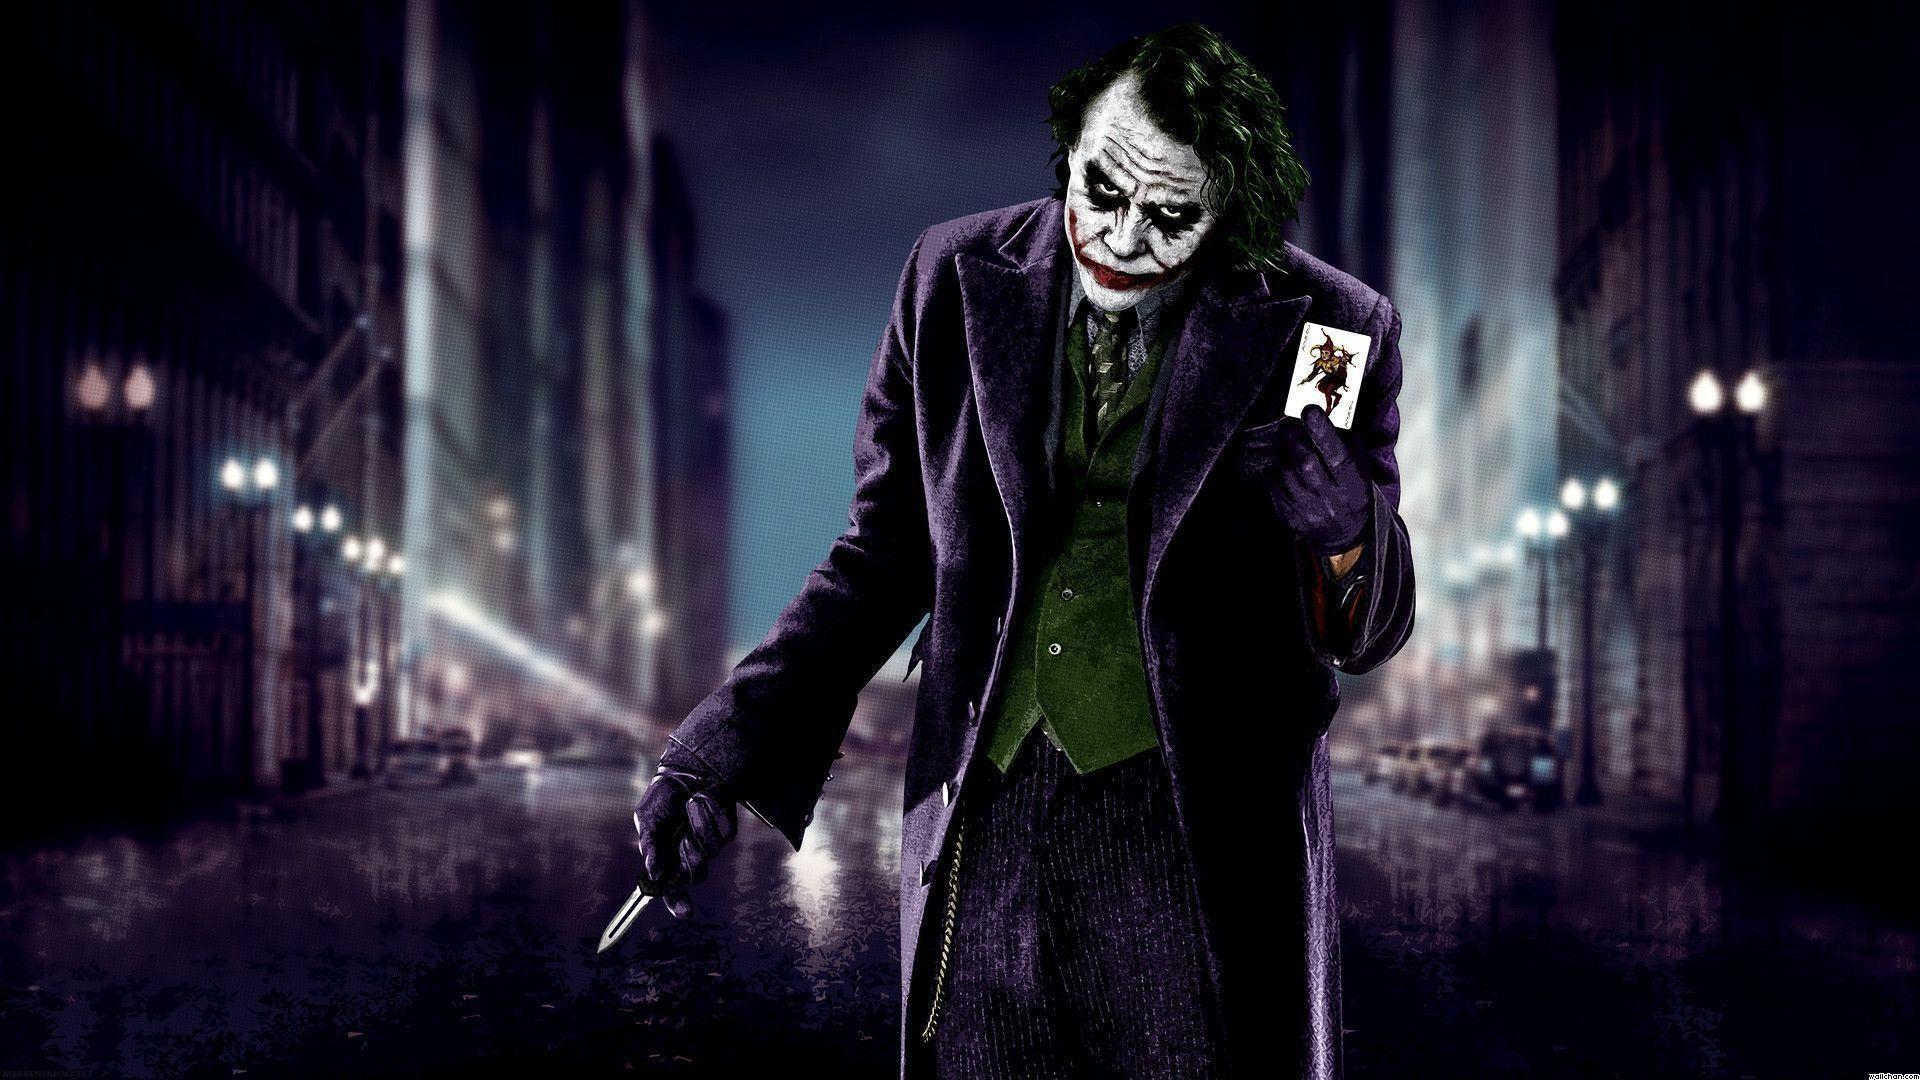 Joker Wallpaper, Best Background Image, HD Wallpaper